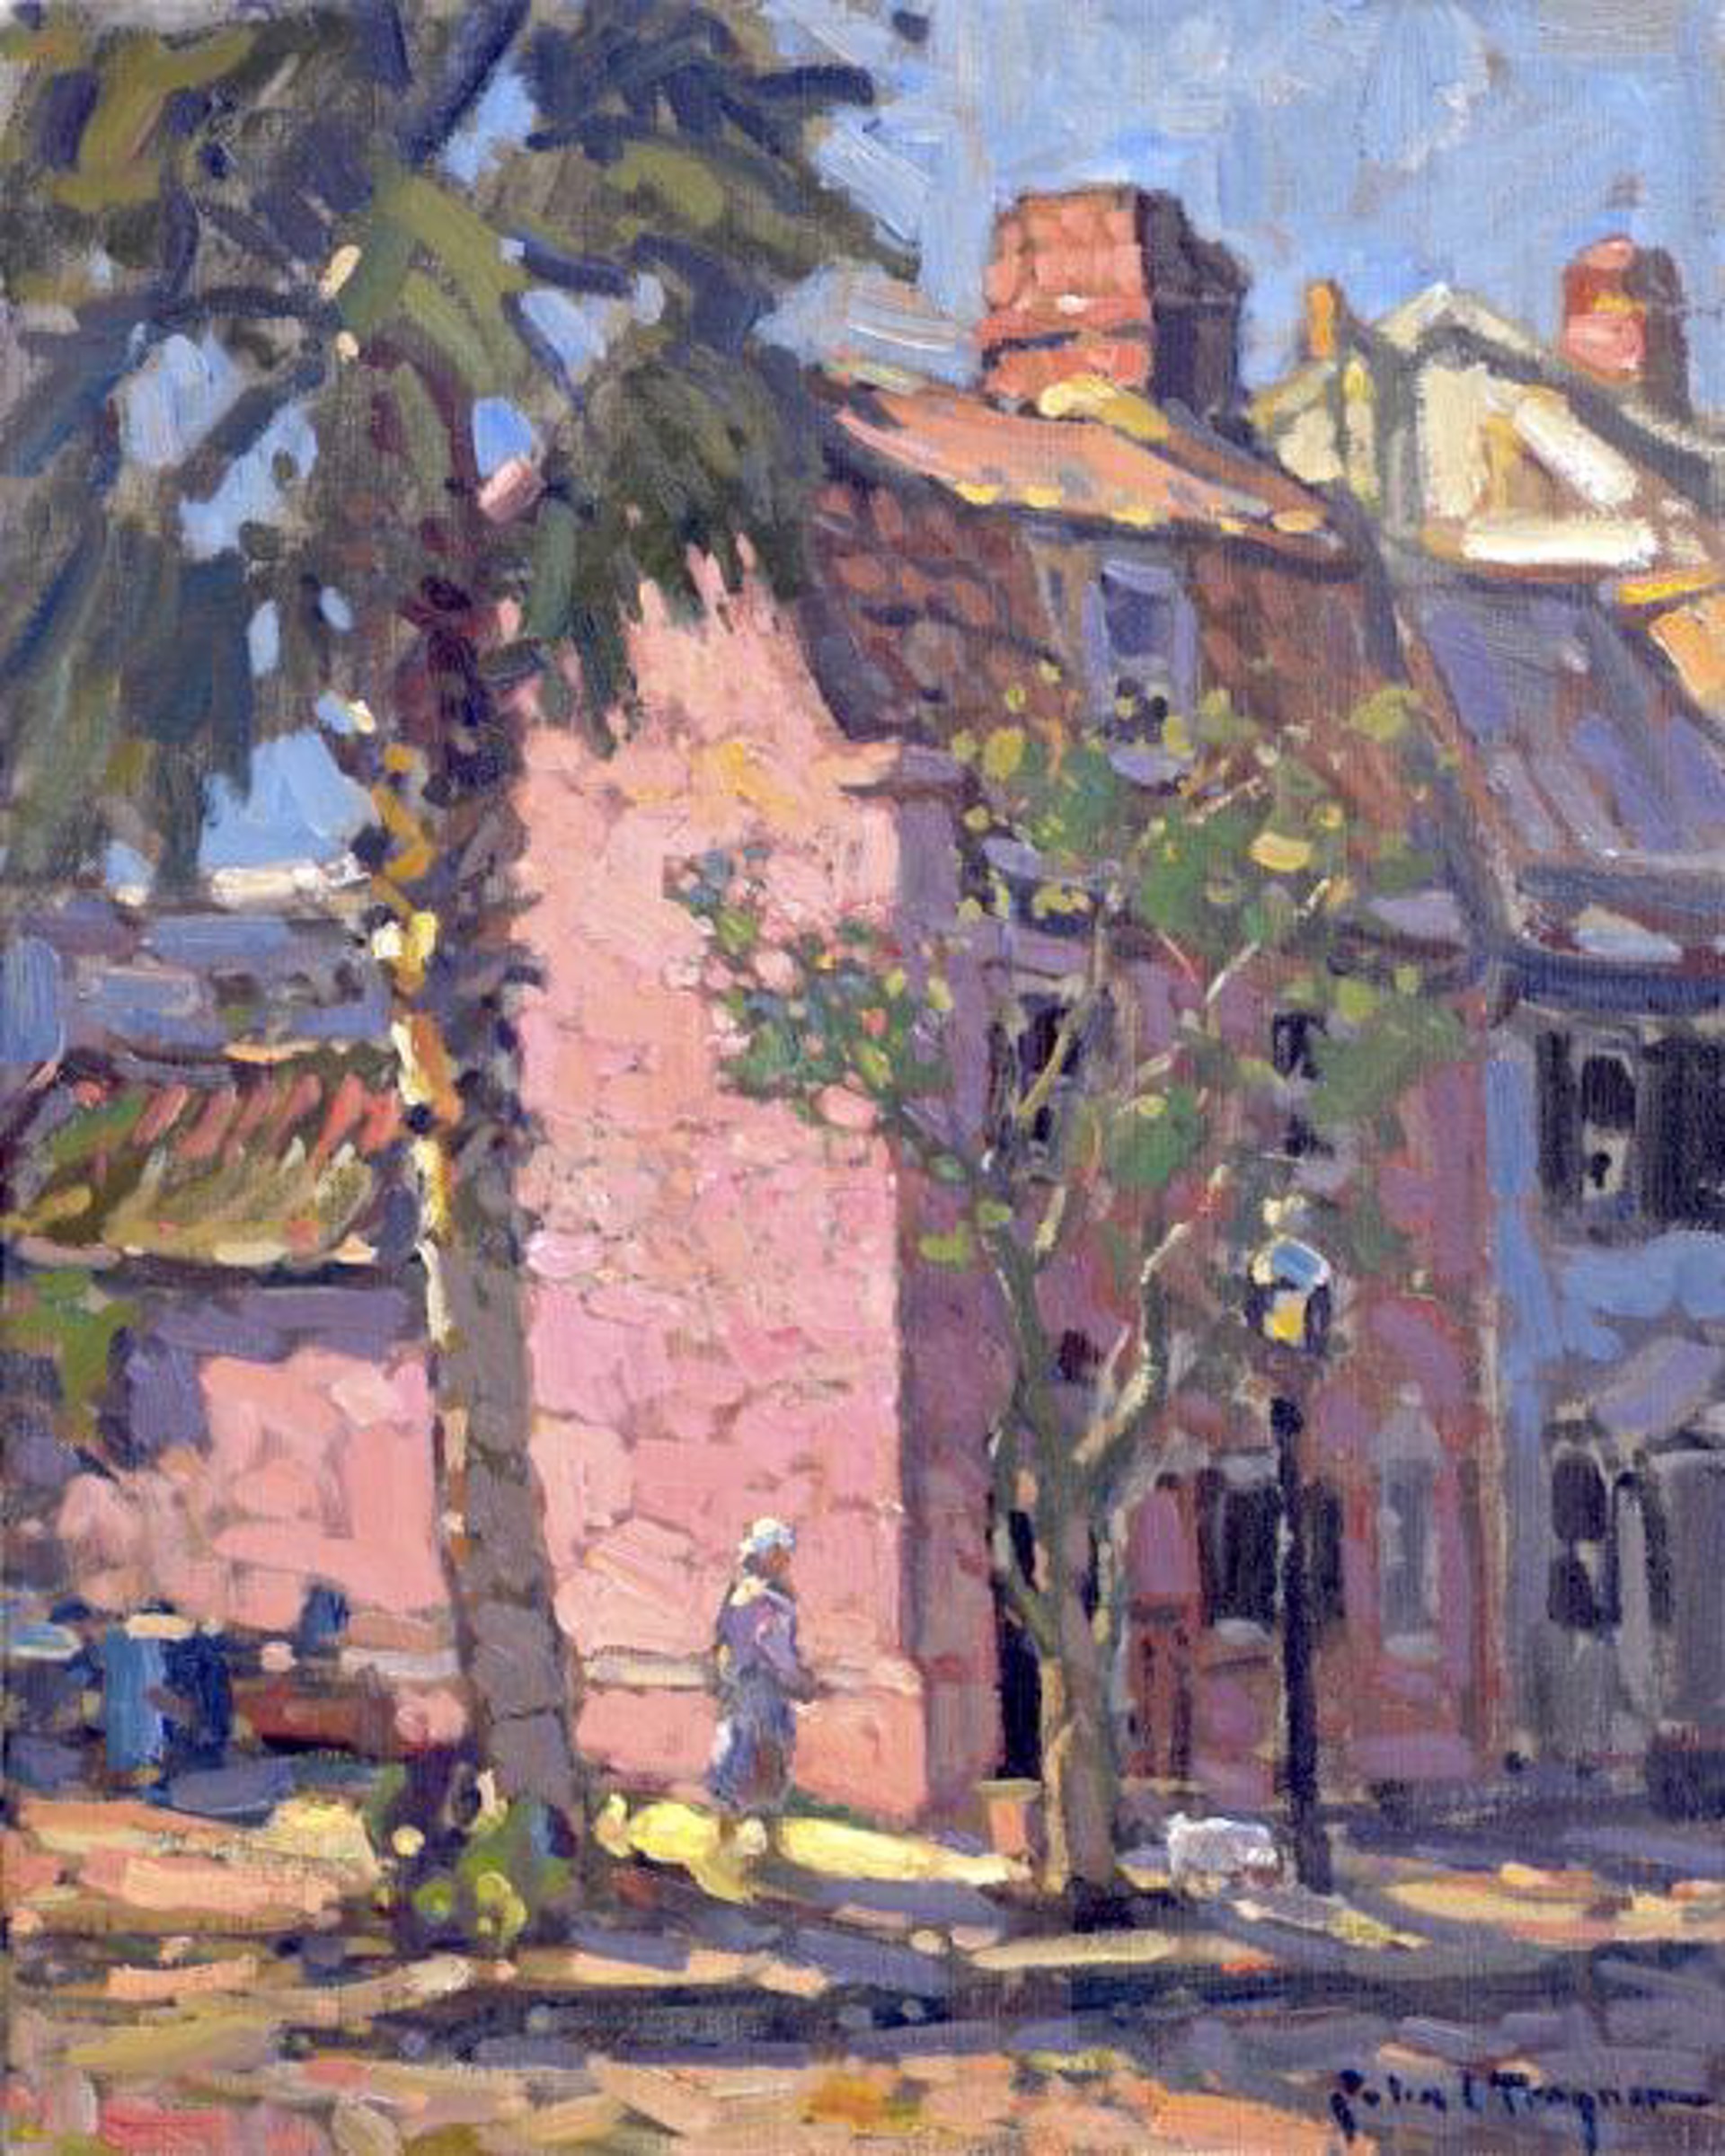 Pink Houses, Charleston by John C. Traynor